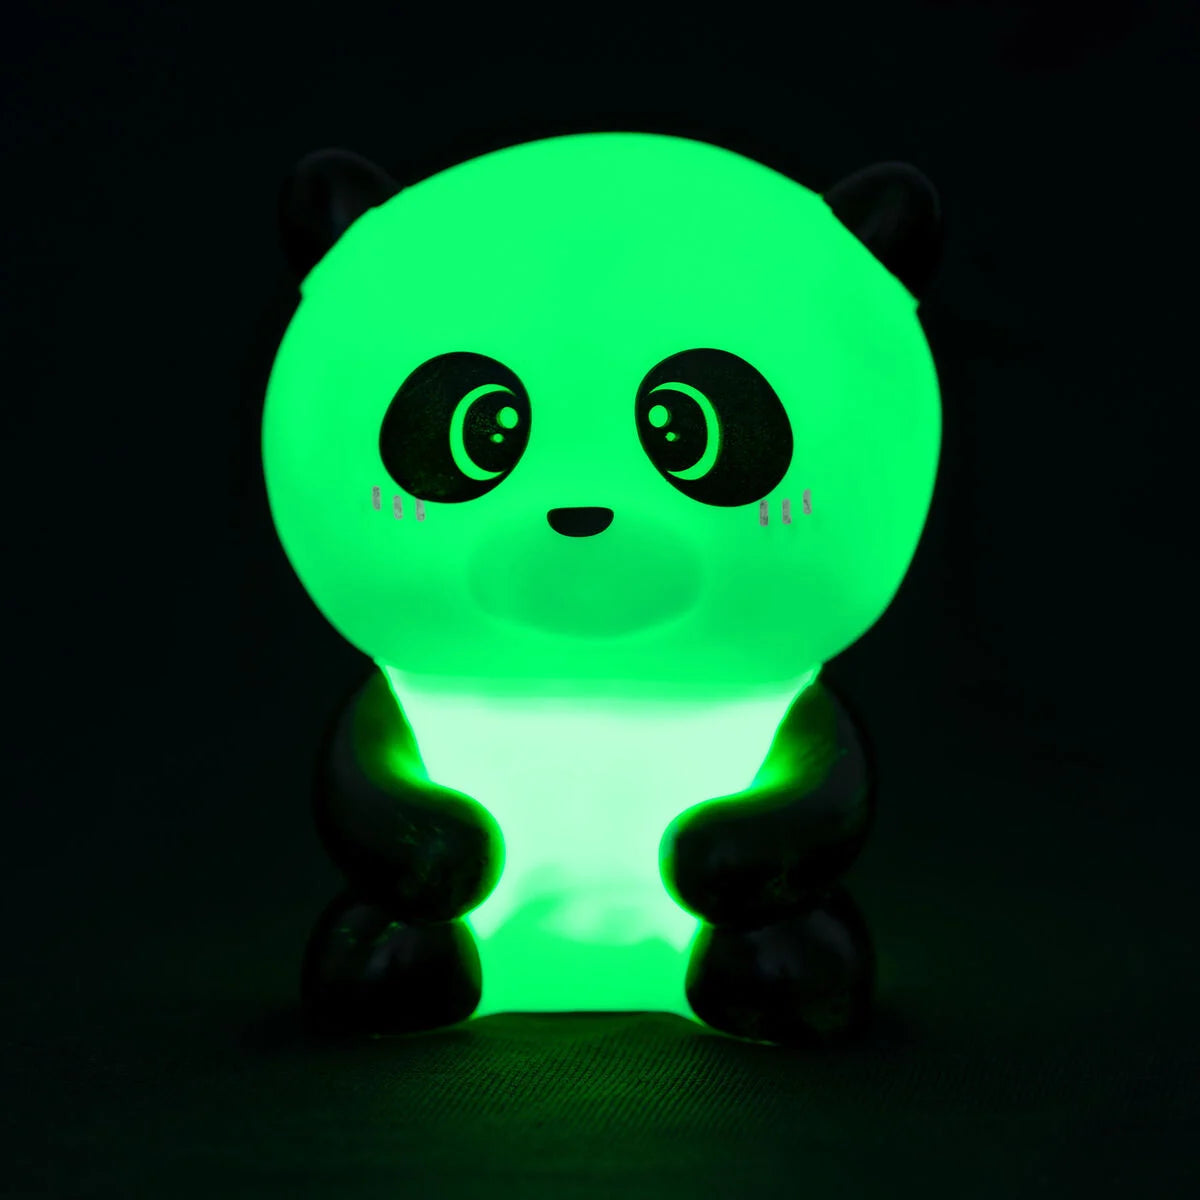 Fab Gifts | Legami Sweet Dreams - Night Light - Panda by Weirs of Baggot Street